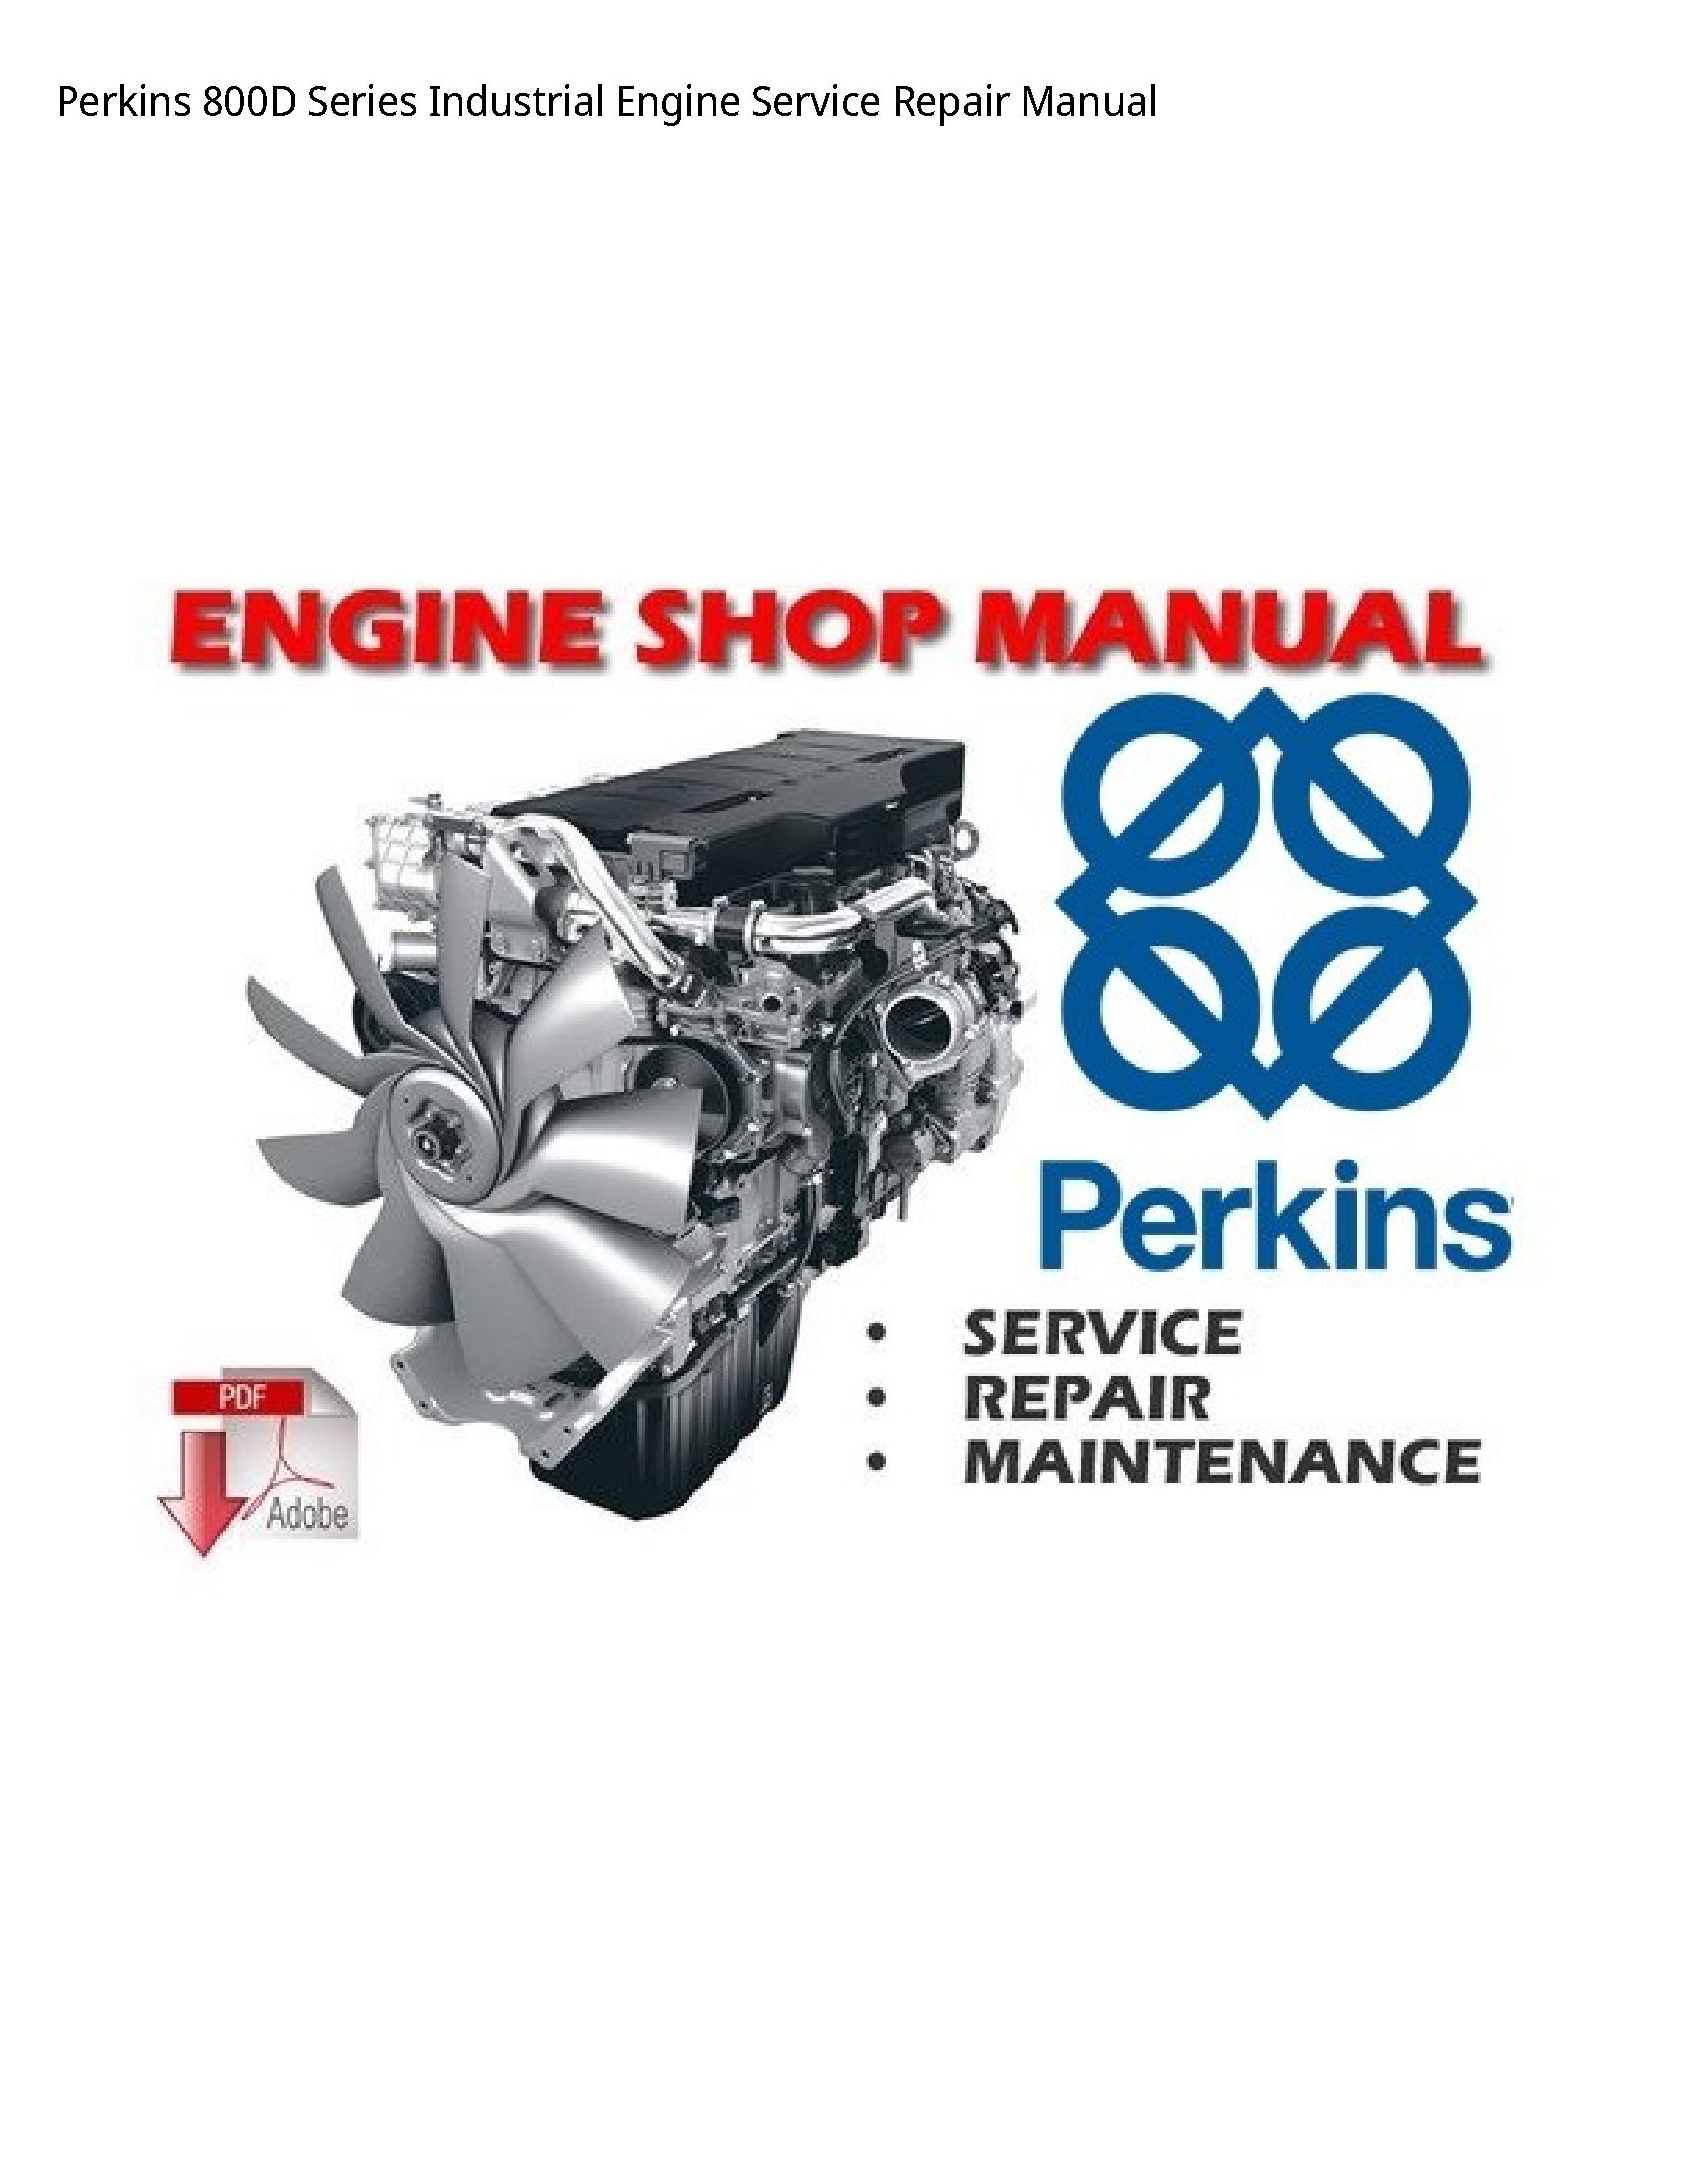 Perkins 800D Series Industrial Engine manual